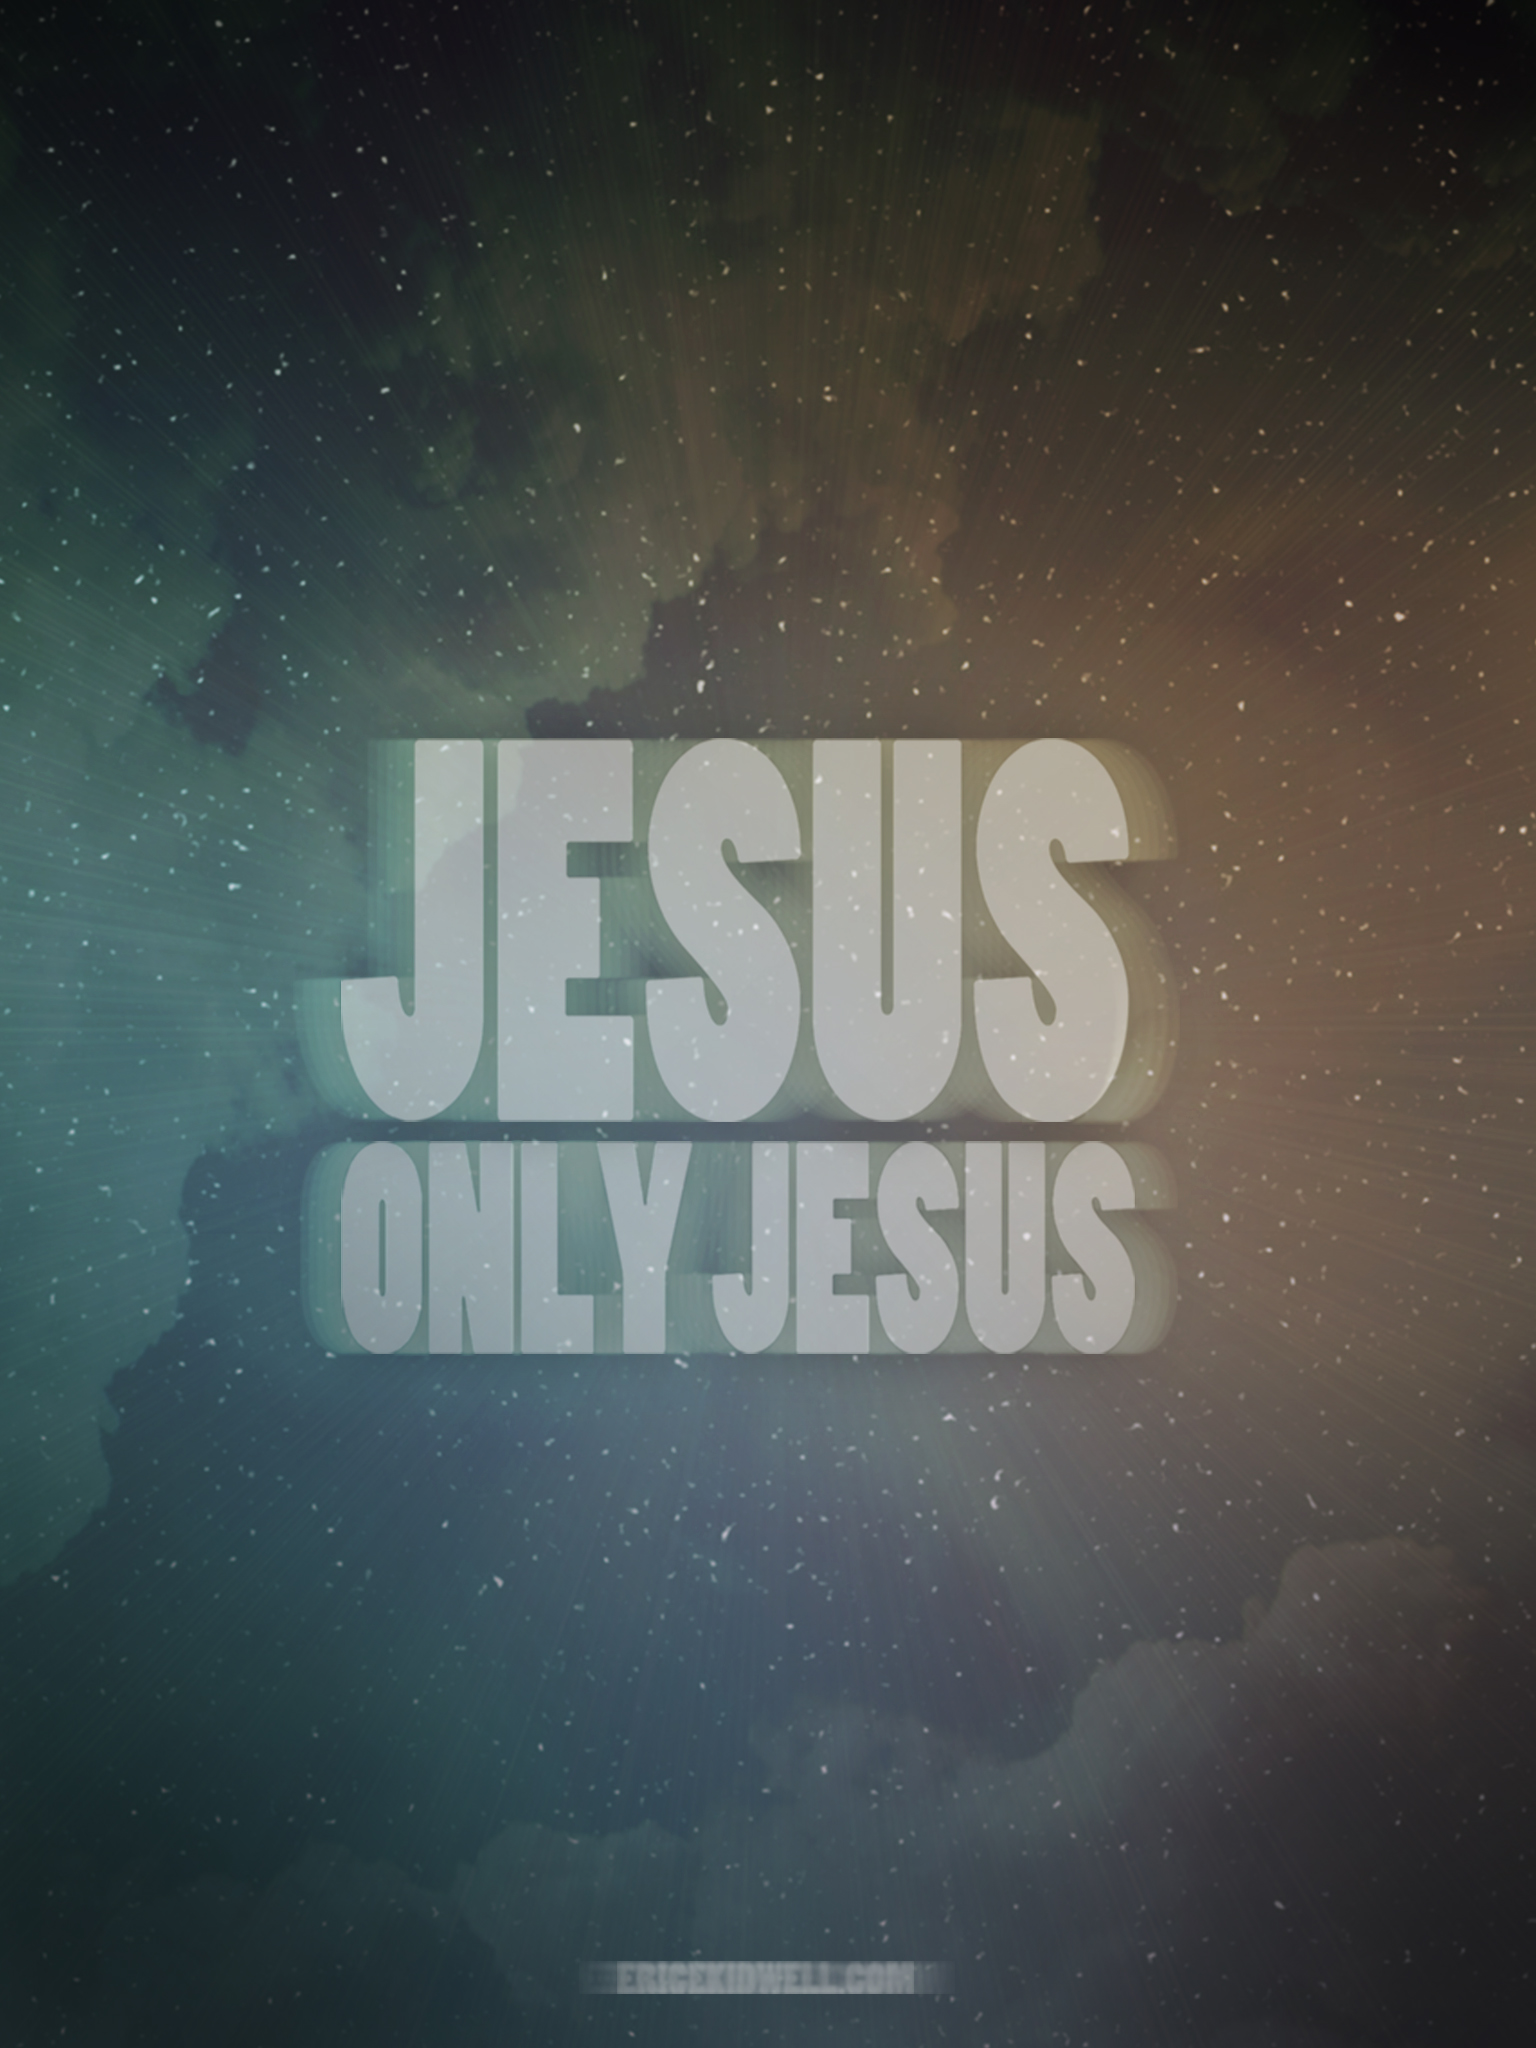 Jesus Only Jesus – FREE Download | Eric E. Kidwell